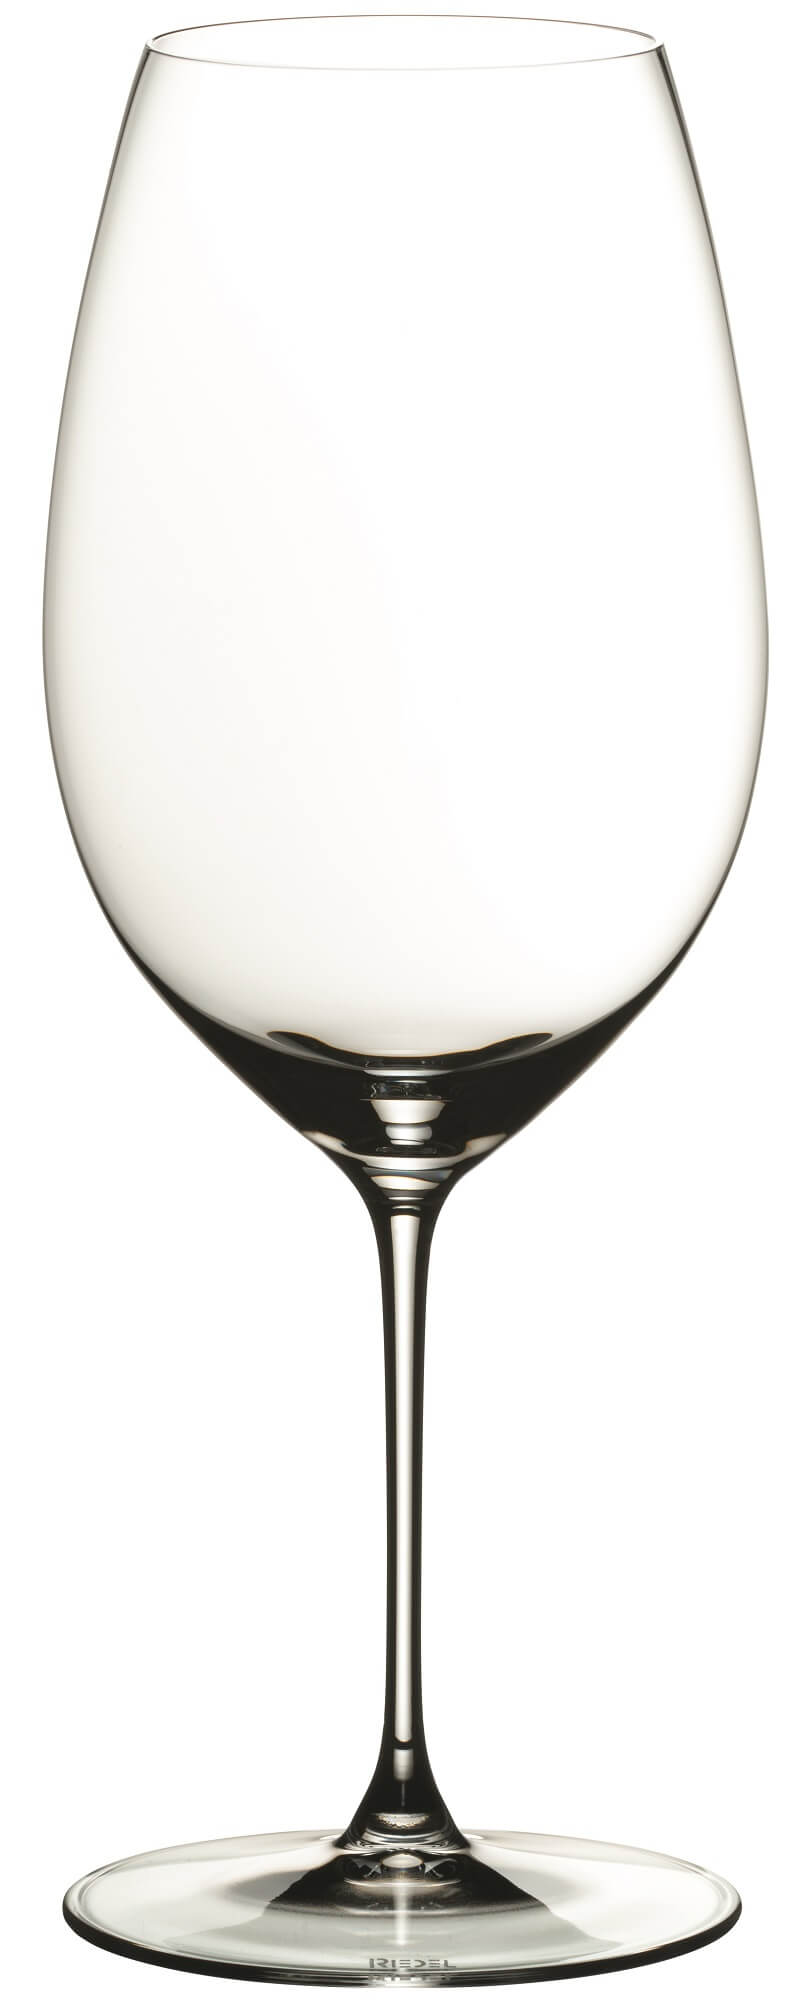 Neue Welt Shiraz Glas Veritas, Riedel - 650ml (2 Stk.)